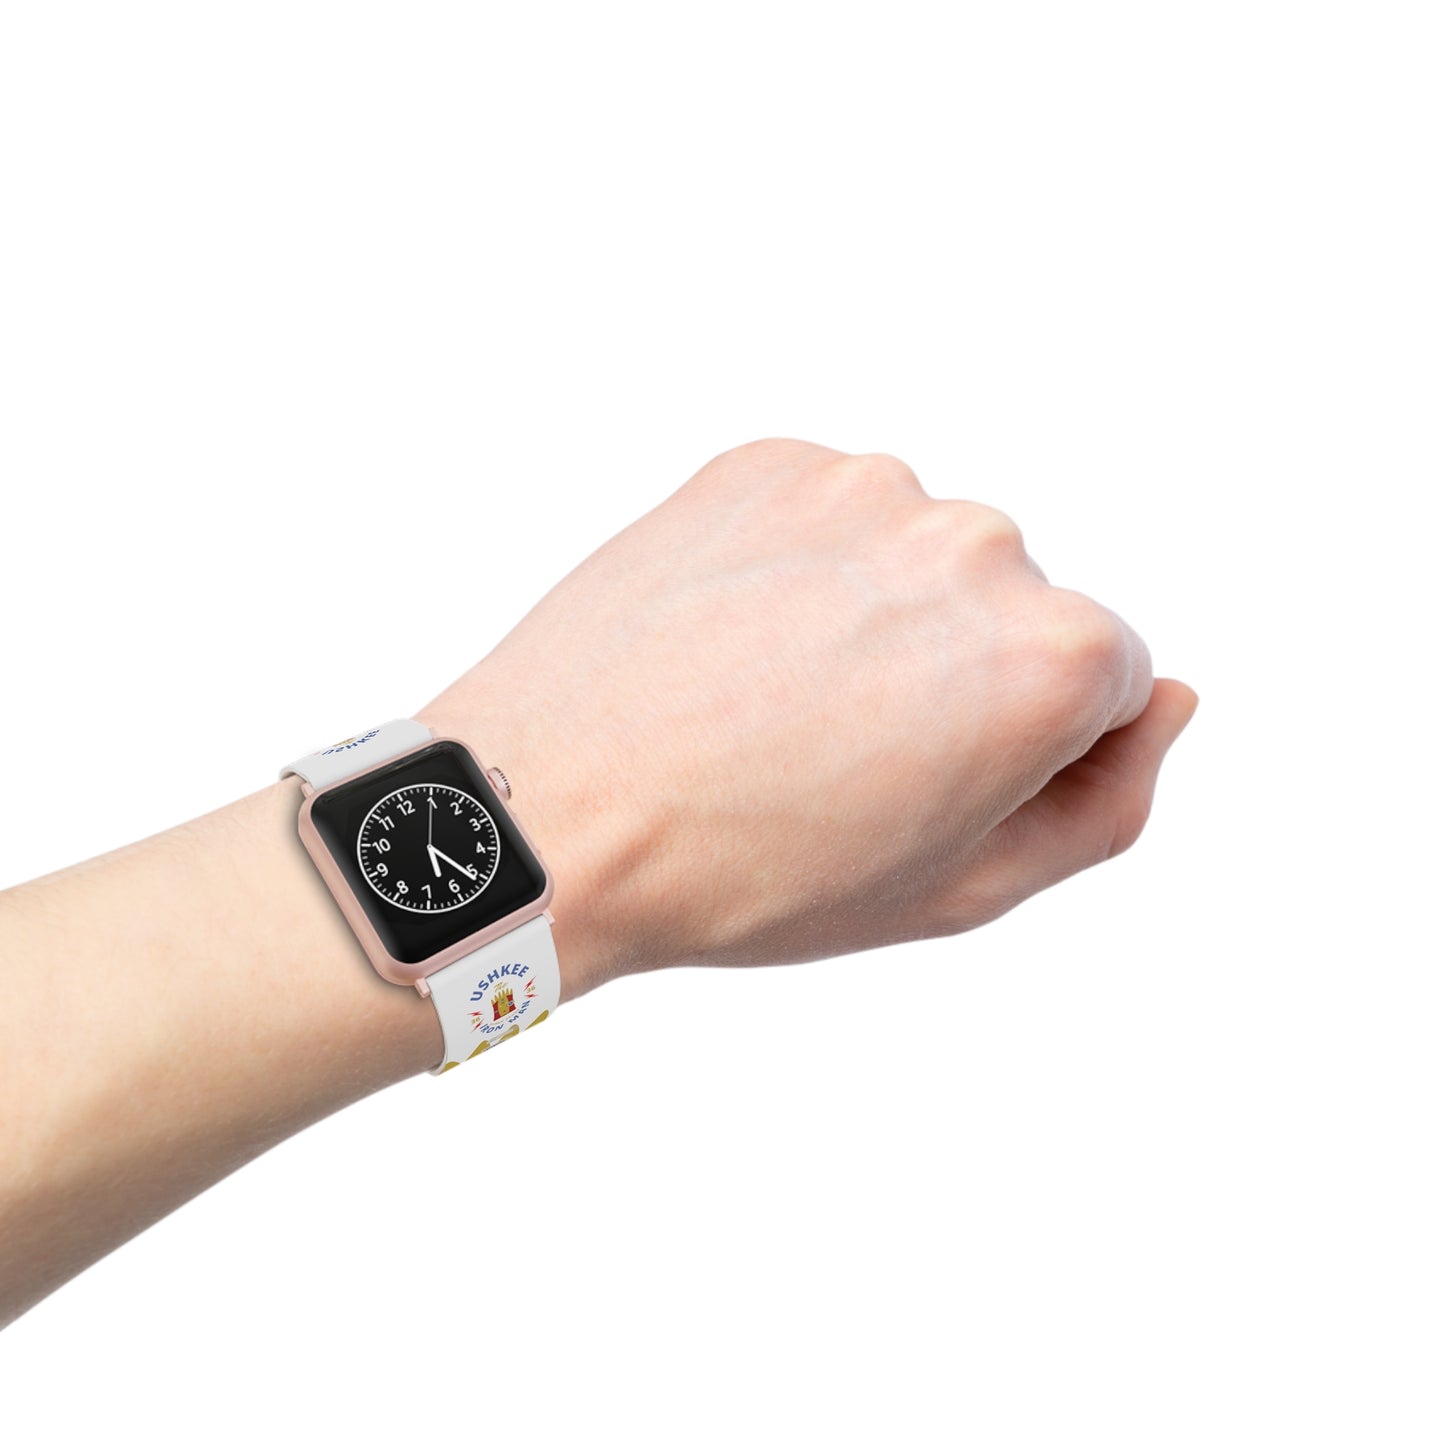 Ushkee Iron Man Watch Band for Apple Watch